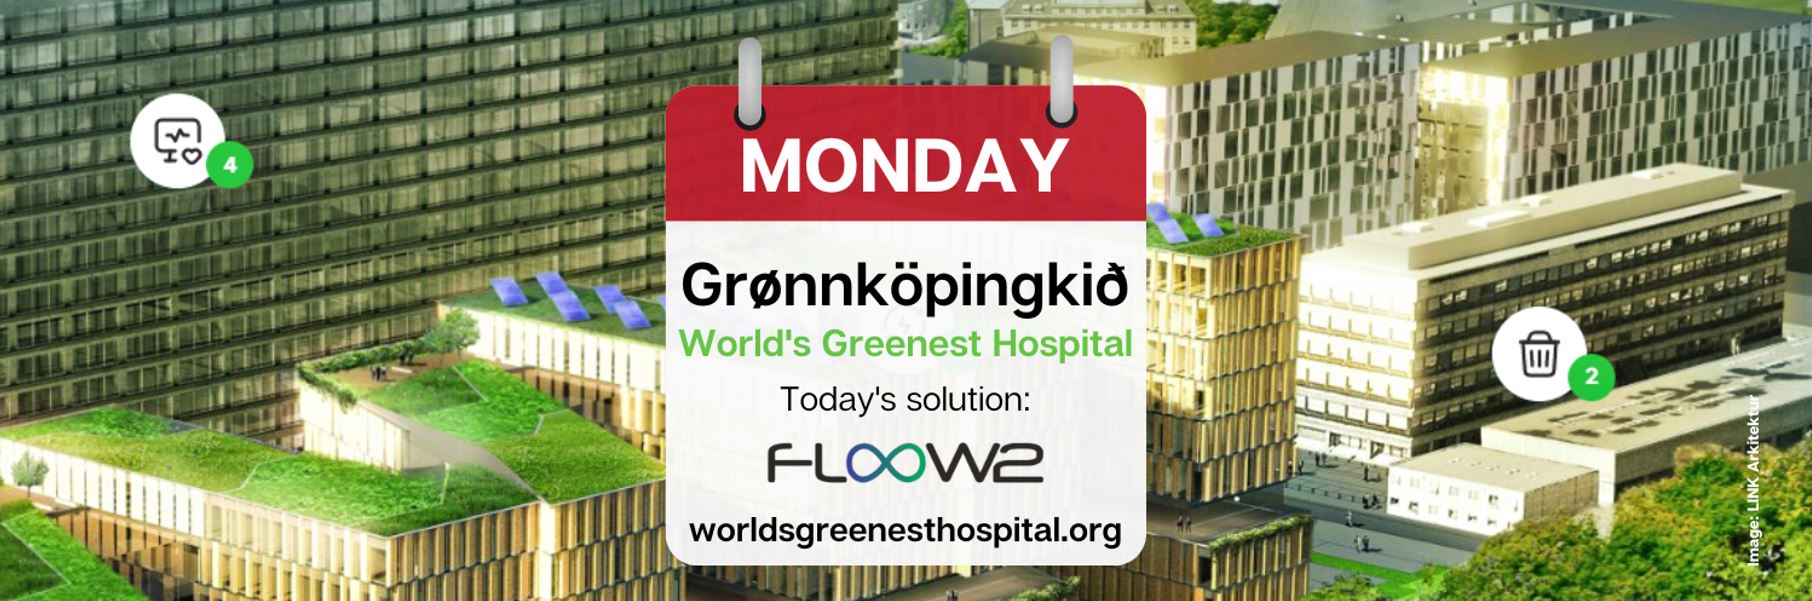 Grønnköpingkið Monday: Solution by FLOOW2